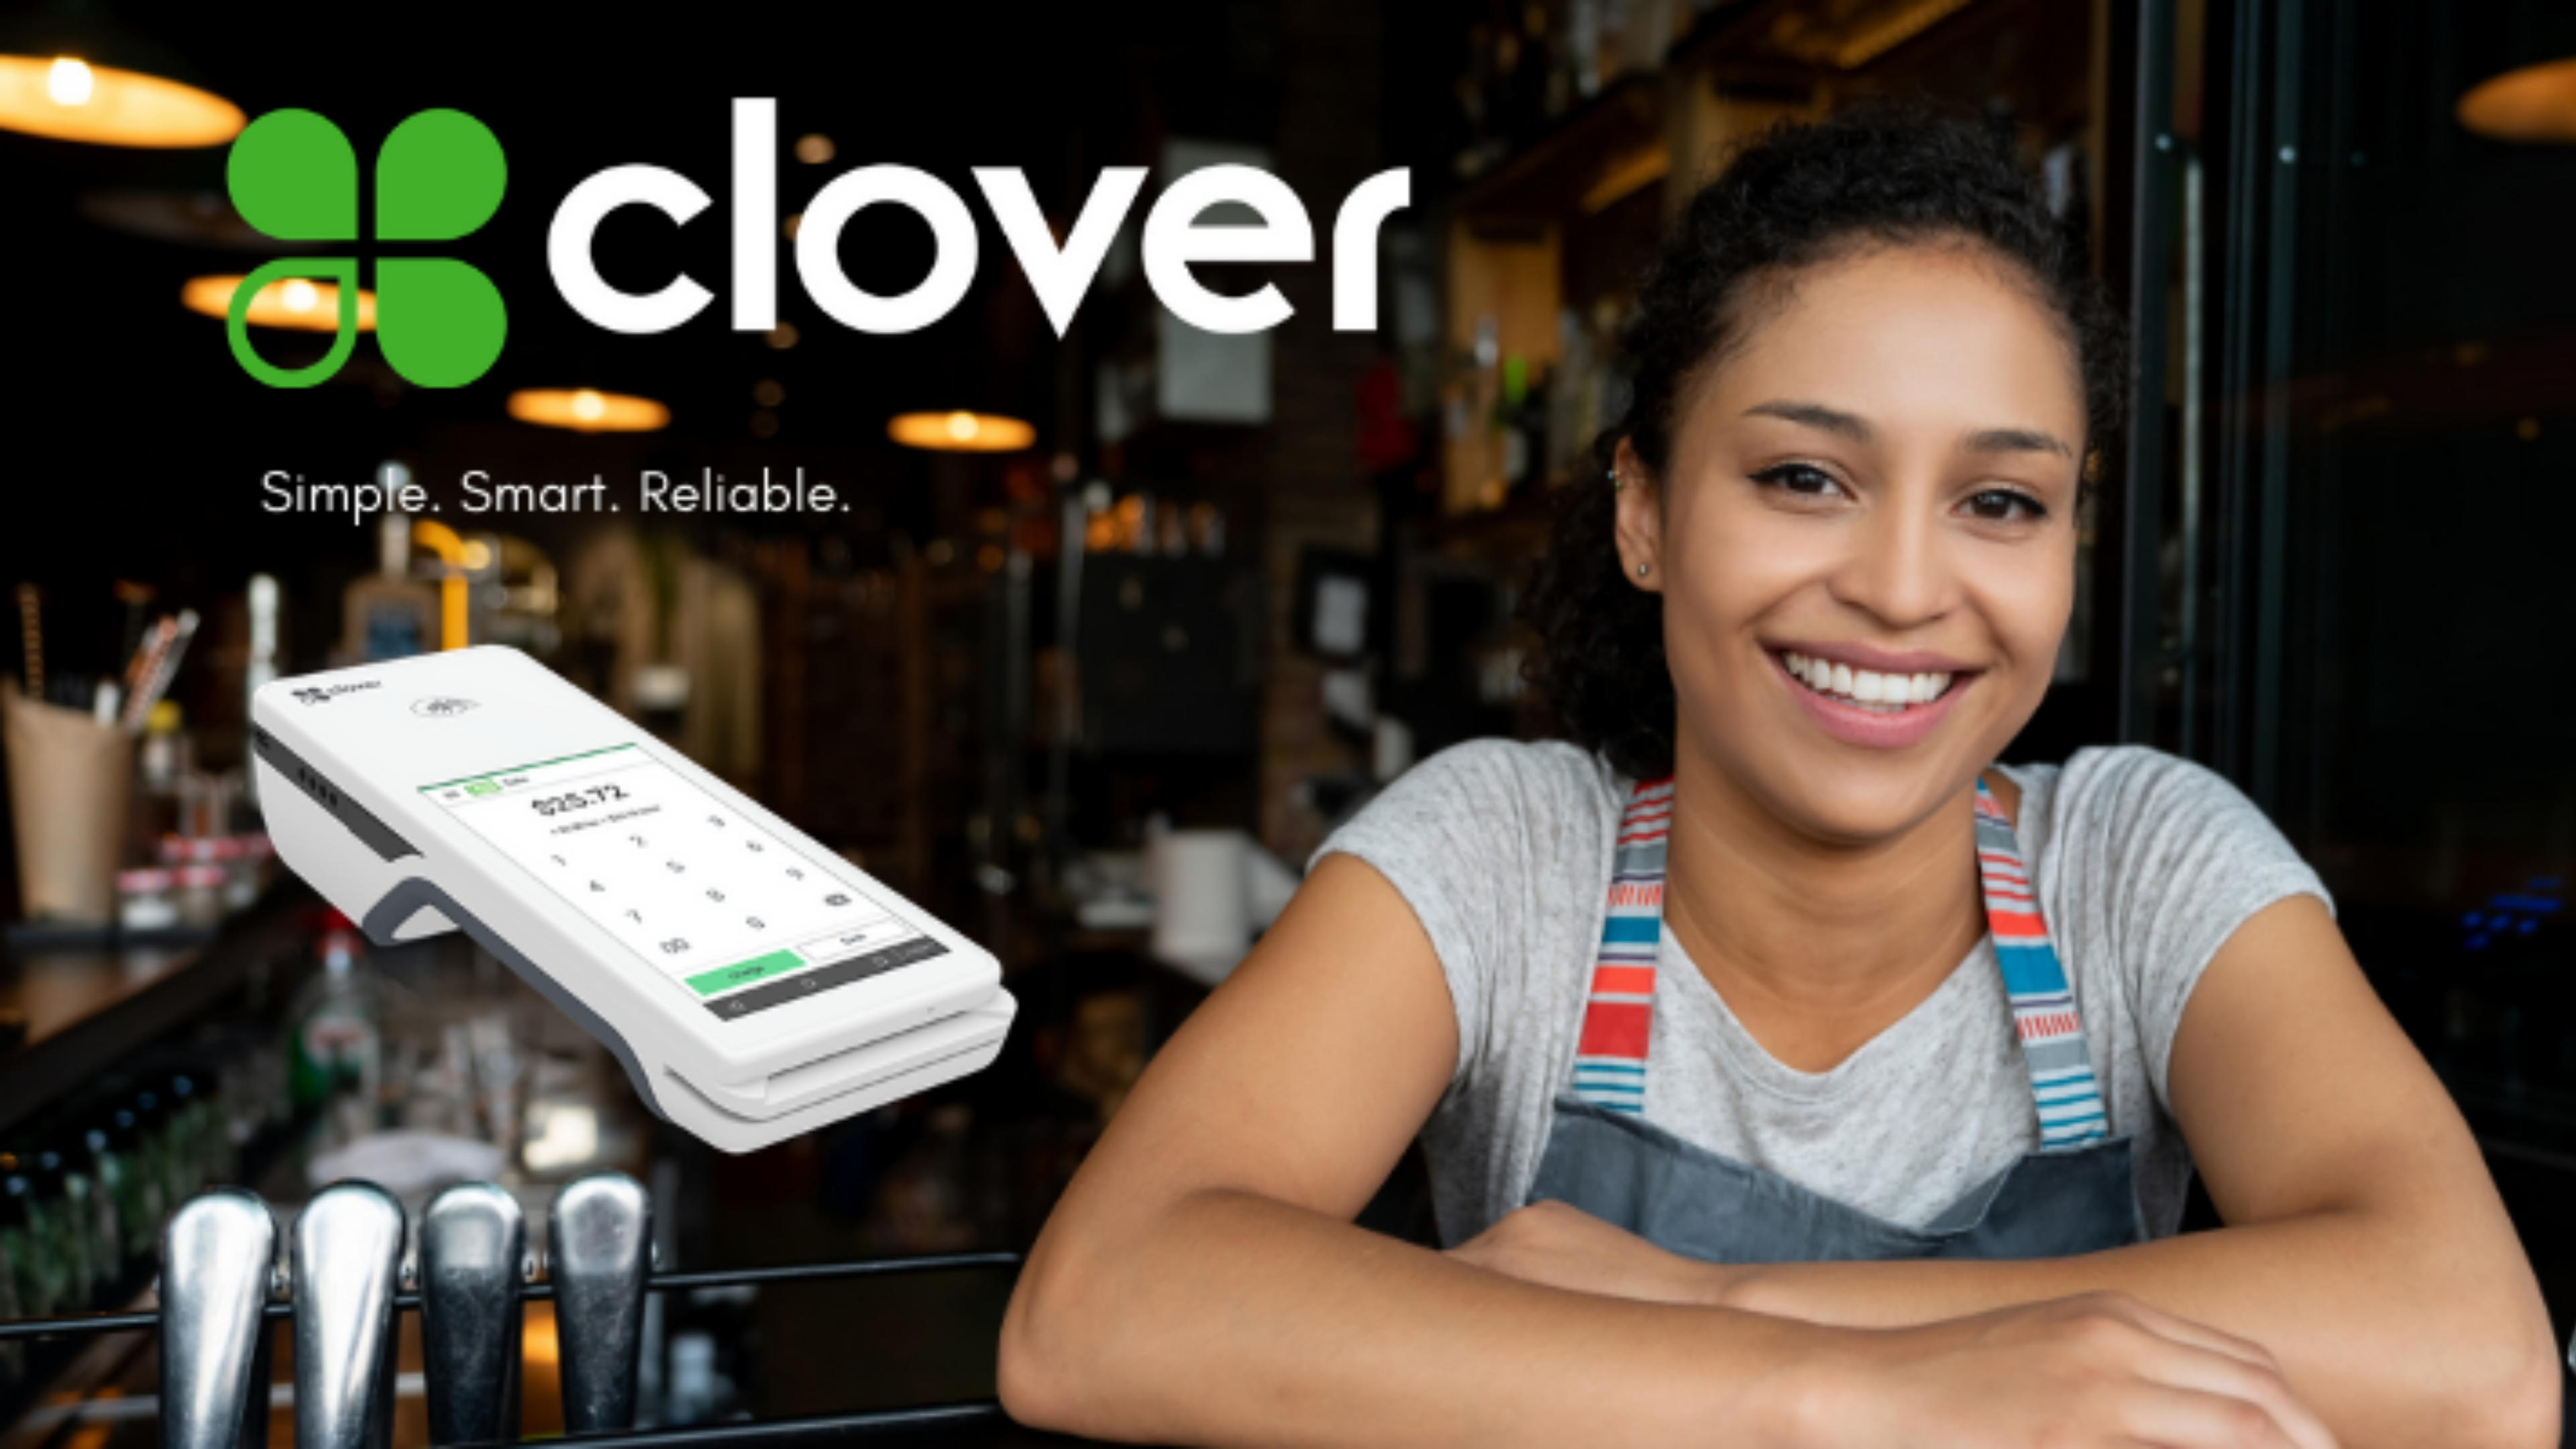 Most Popular Apps in the Clover App Market